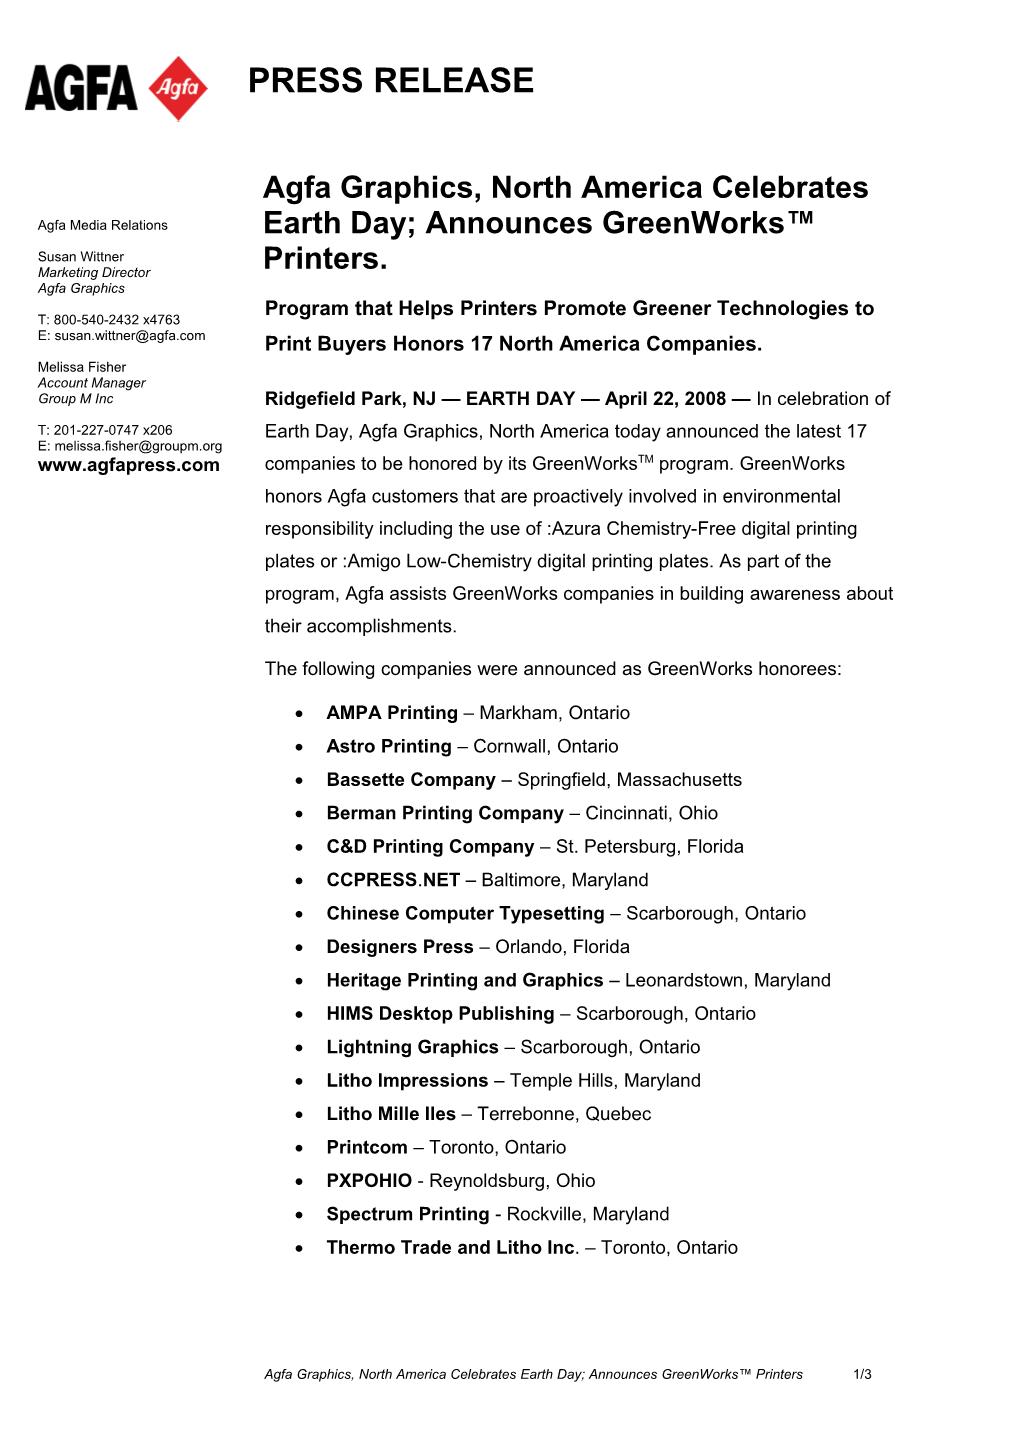 Agfa Graphics, North America Celebrates Earth Day; Announces Greenworks Printers